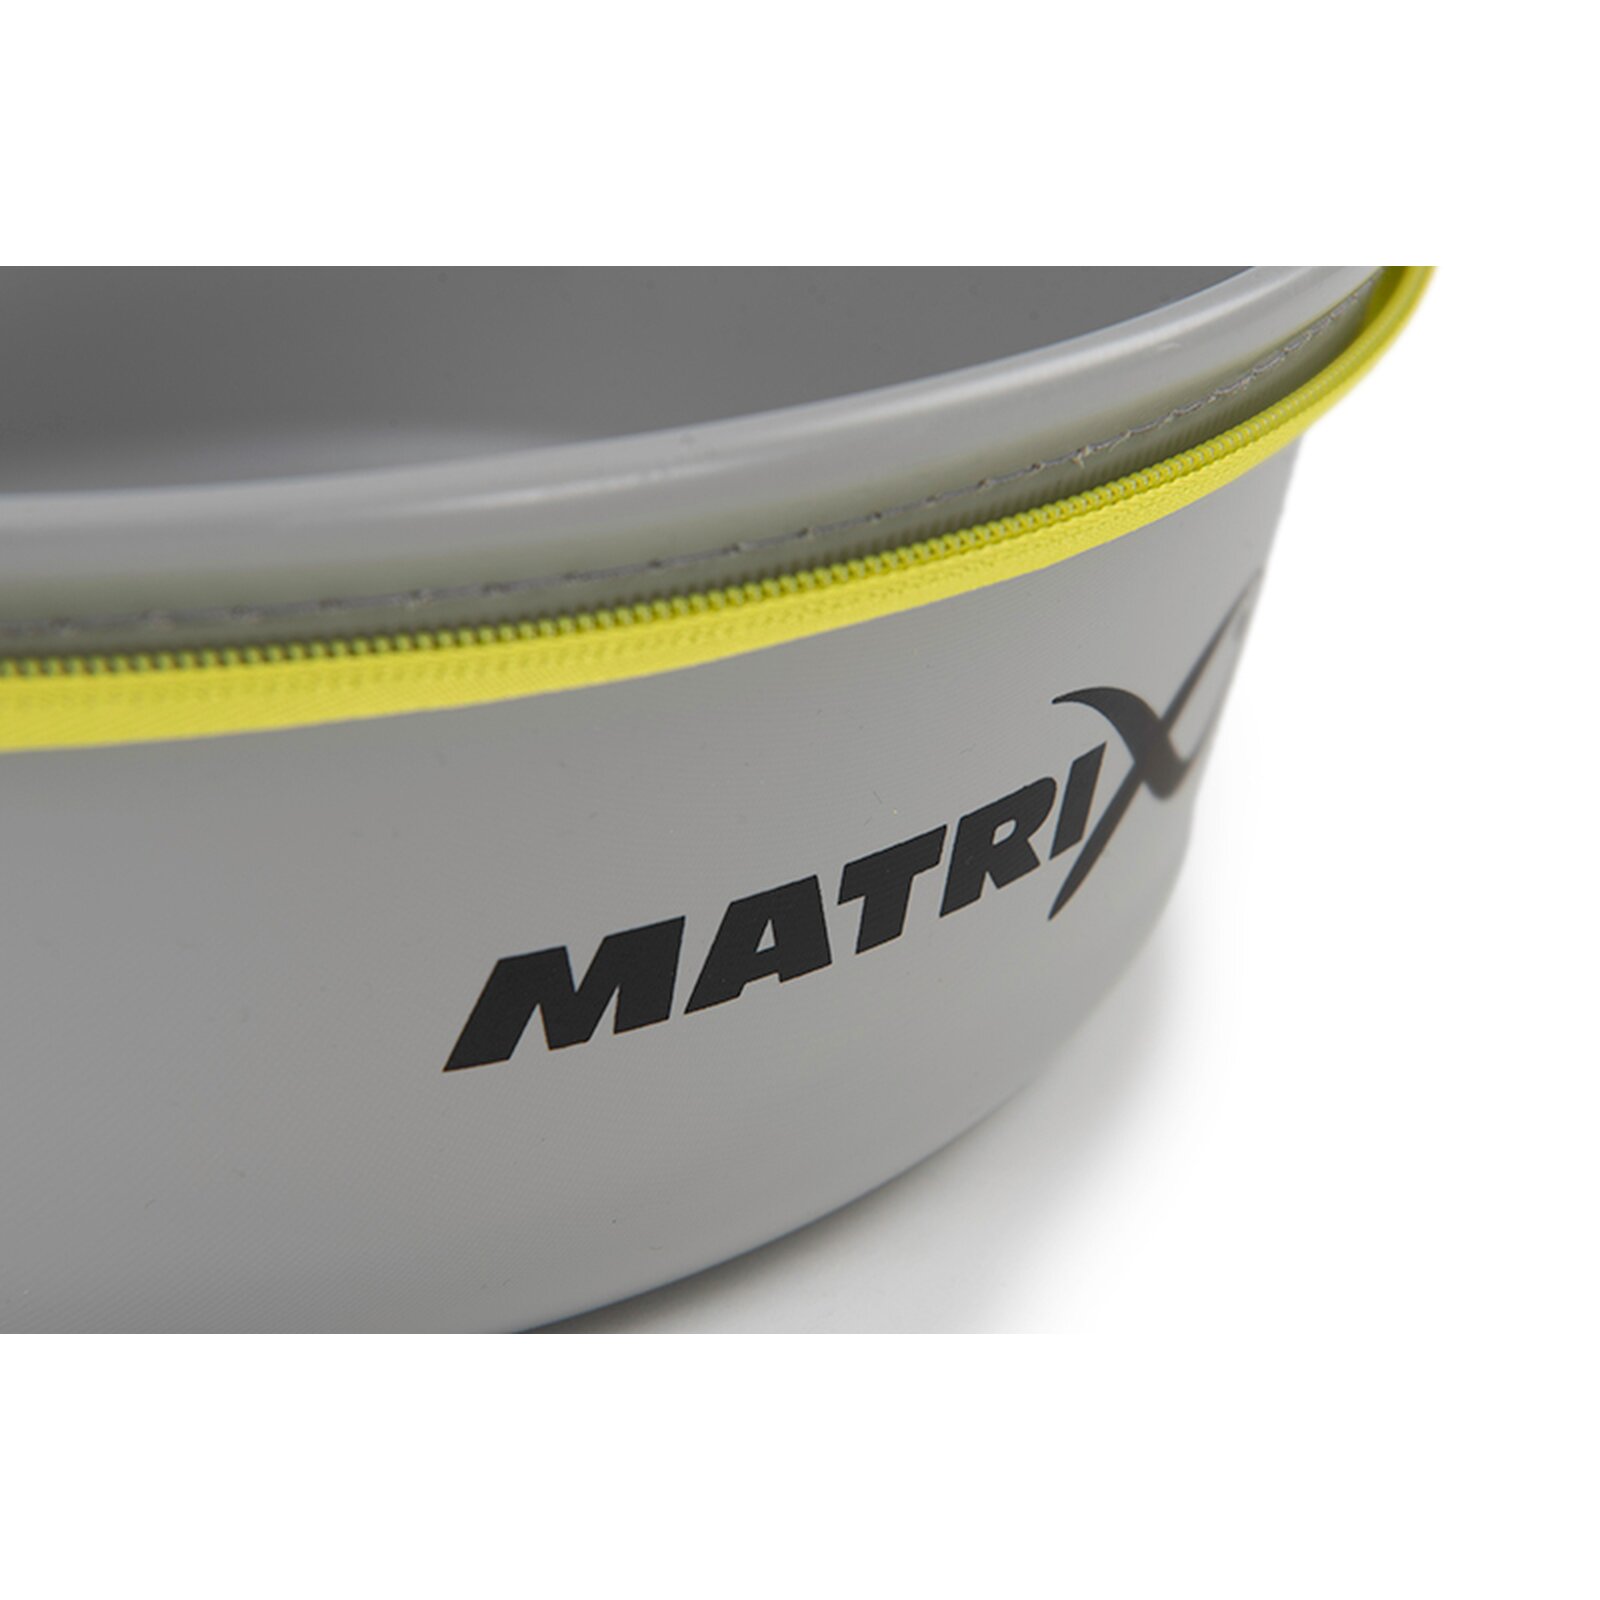 Matrix EVA Airflow Bowls